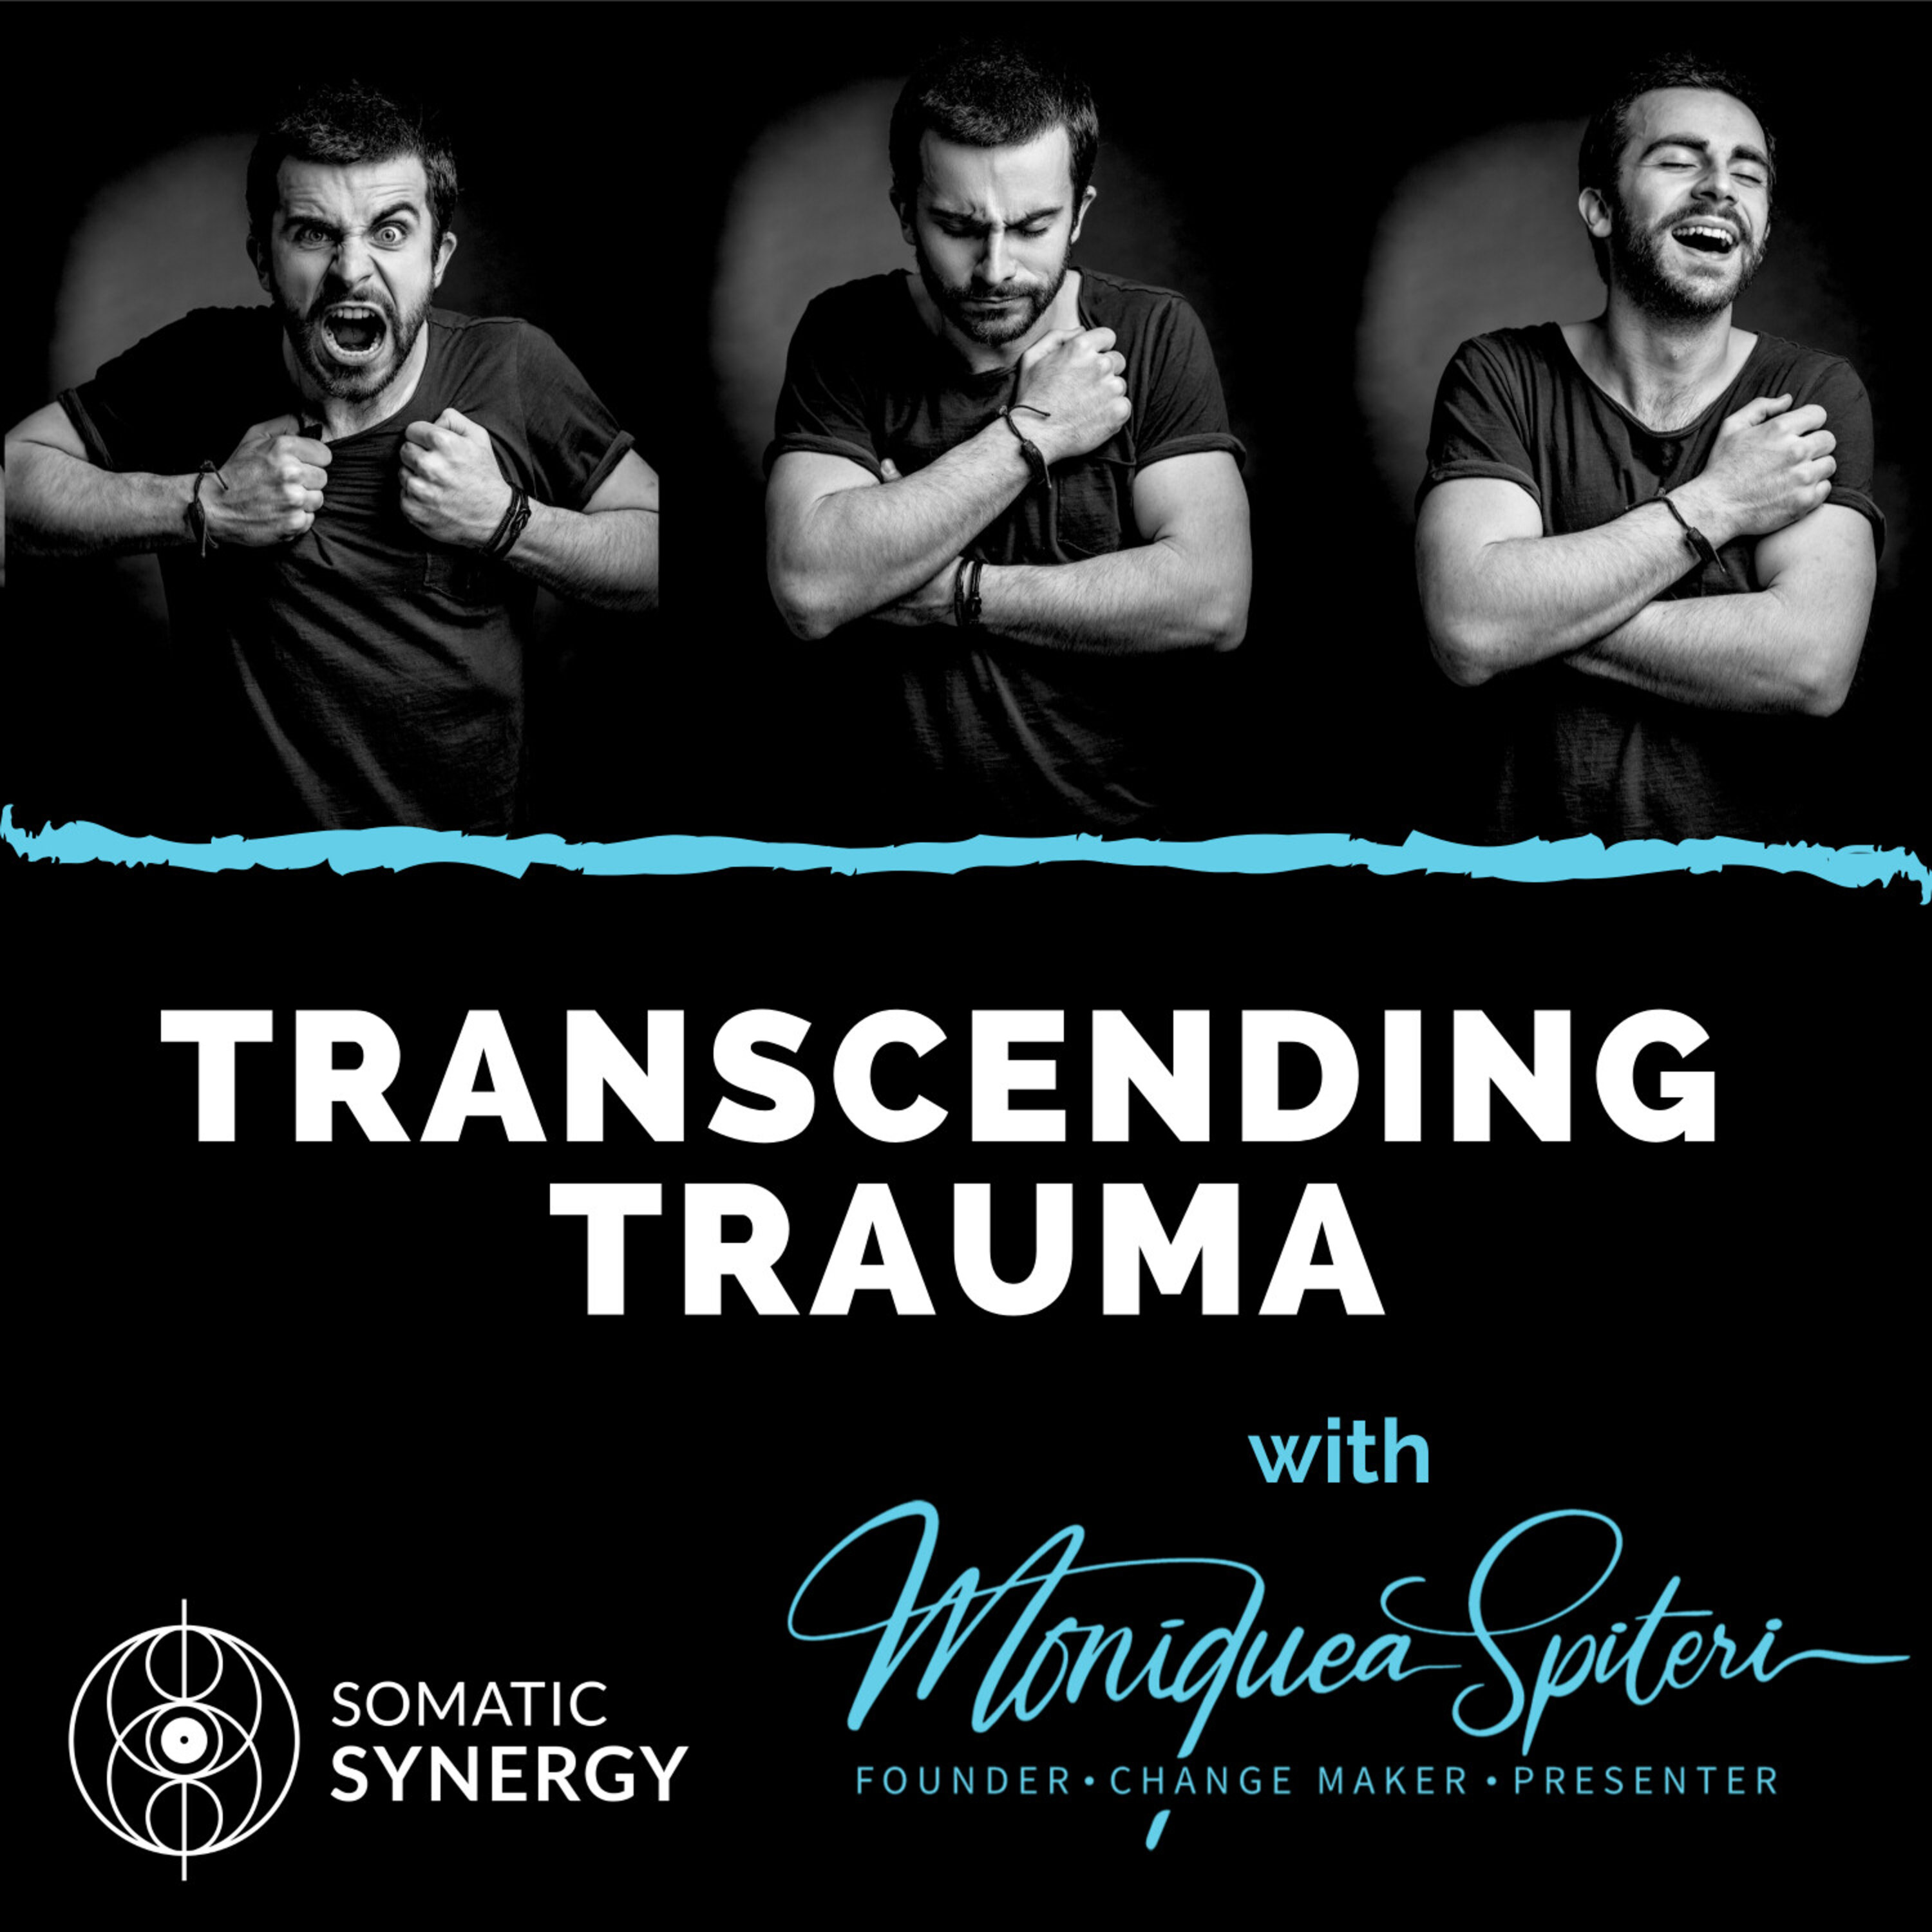 Transcending Trauma with Moniquea Spiteri podcast show image